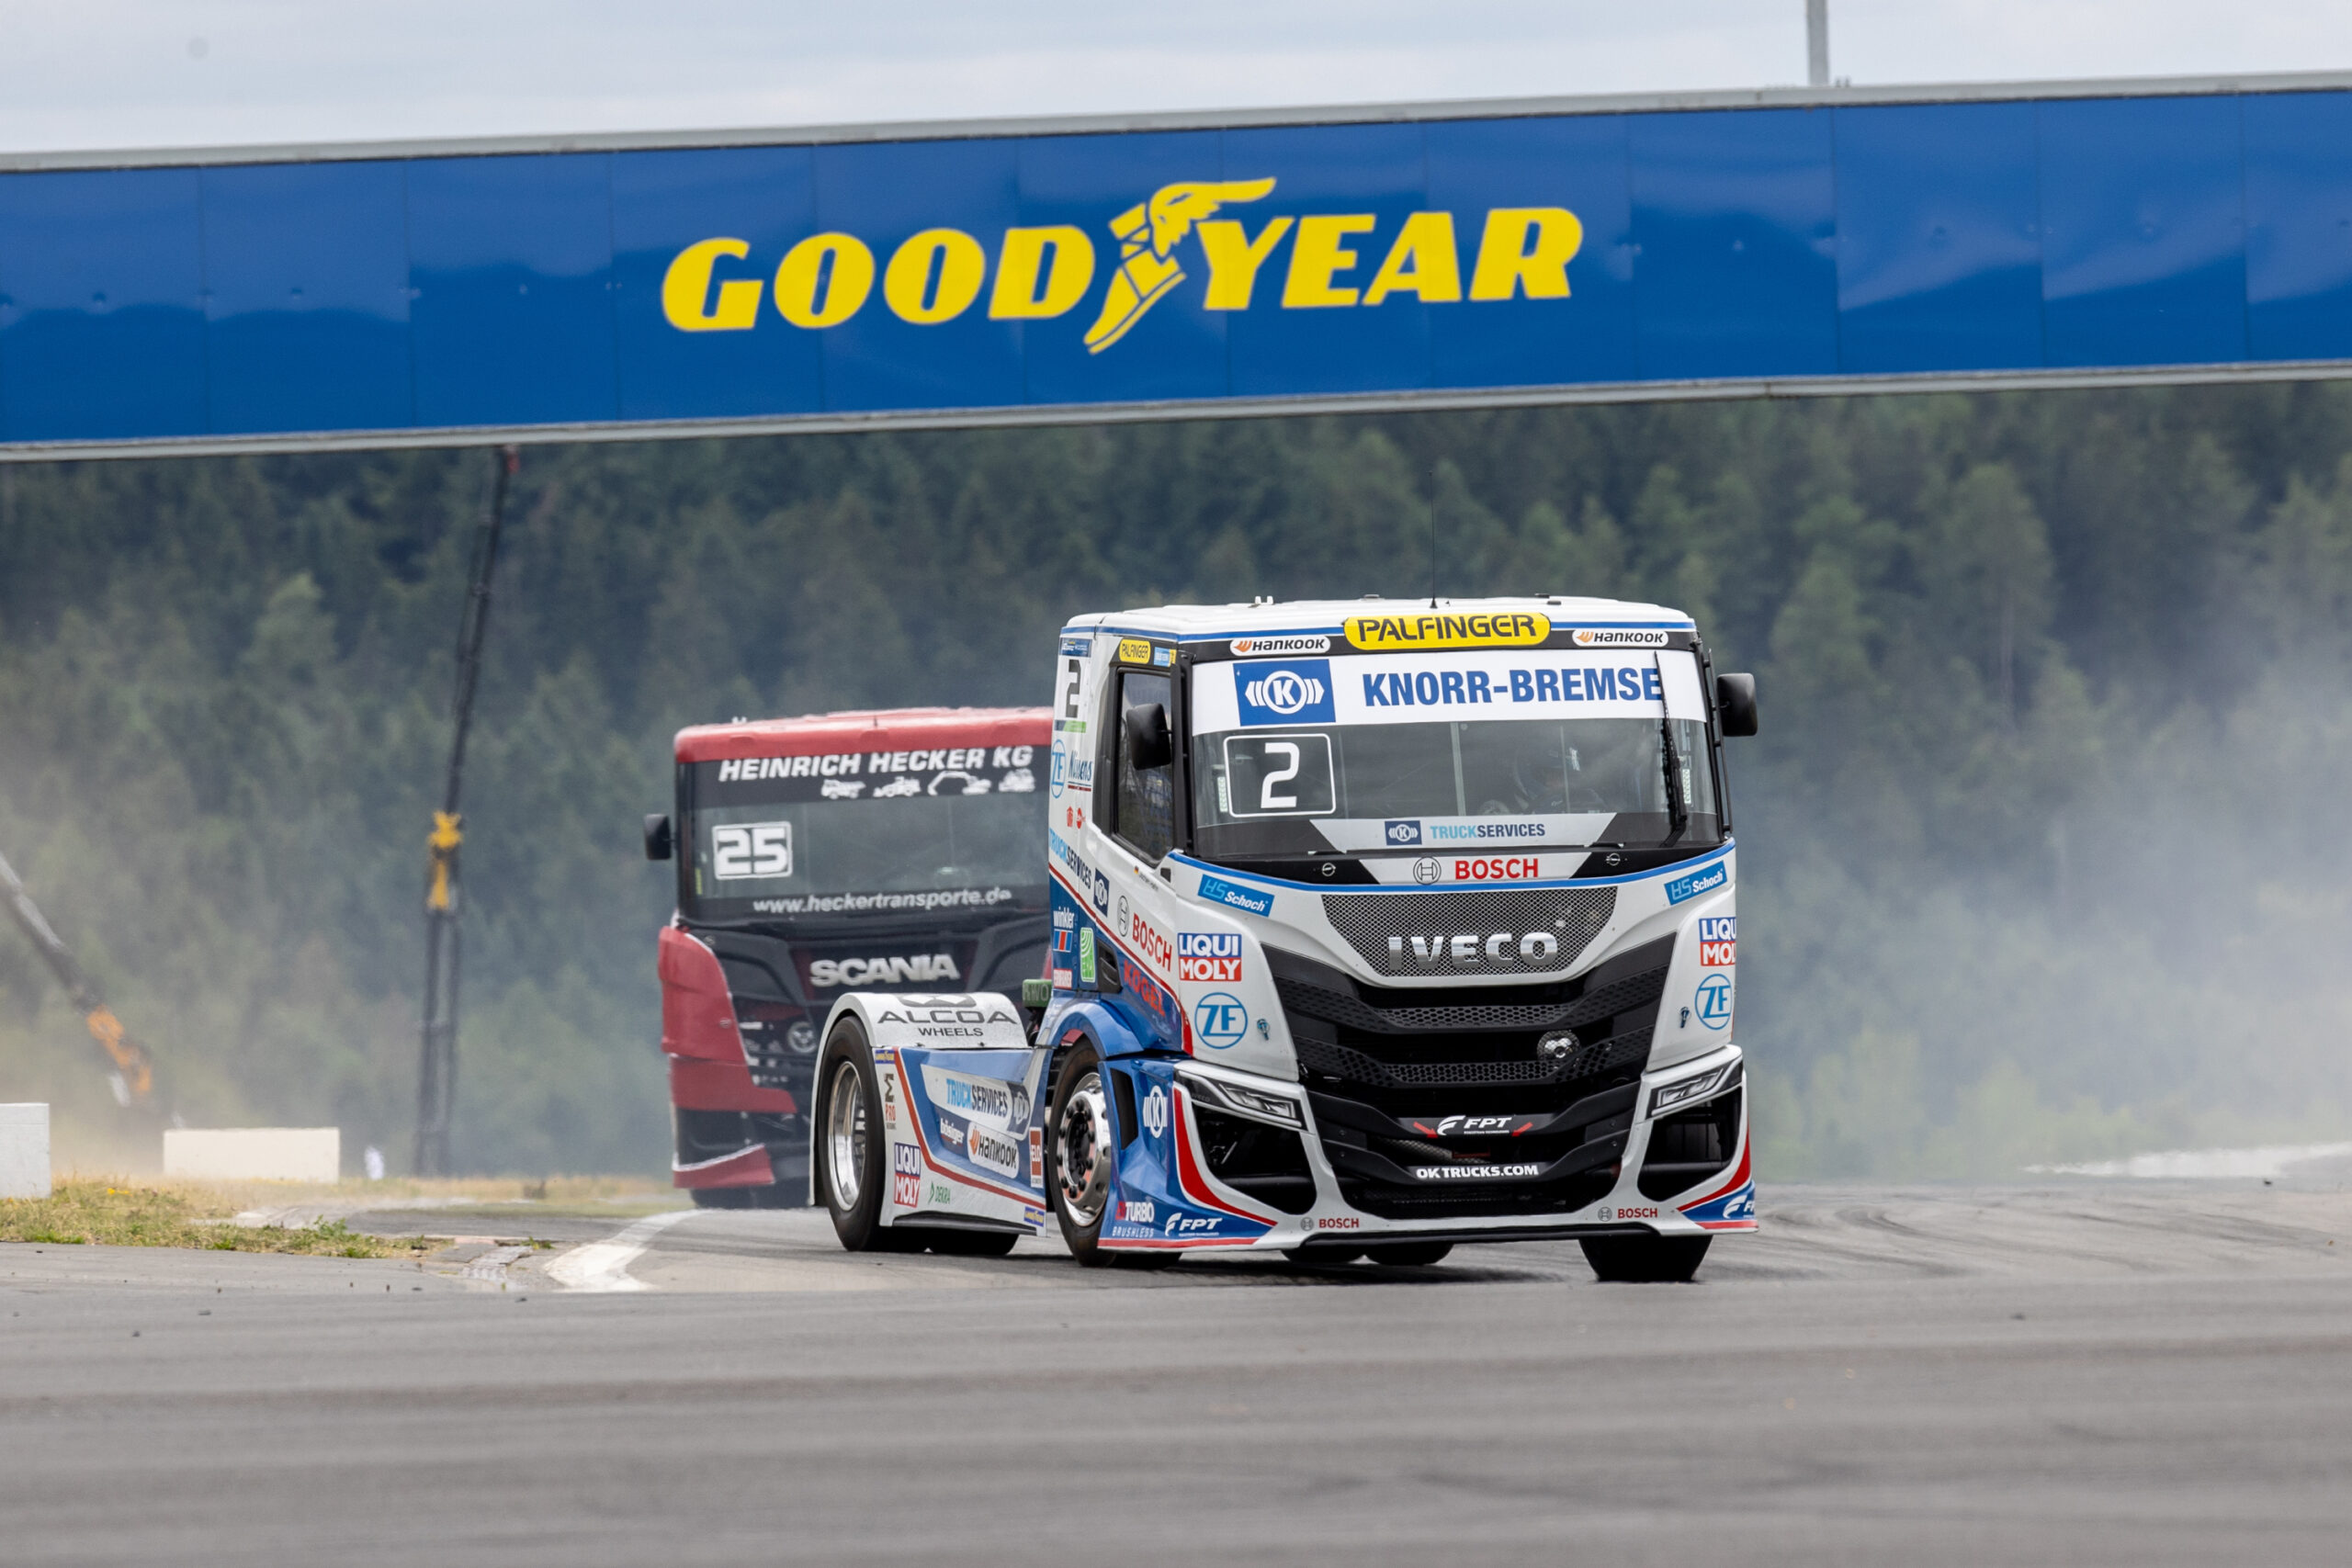 Truck-Grand-Prix 2019: V8-Sonderedition von Scania - ADAC Truck Grand Prix, News